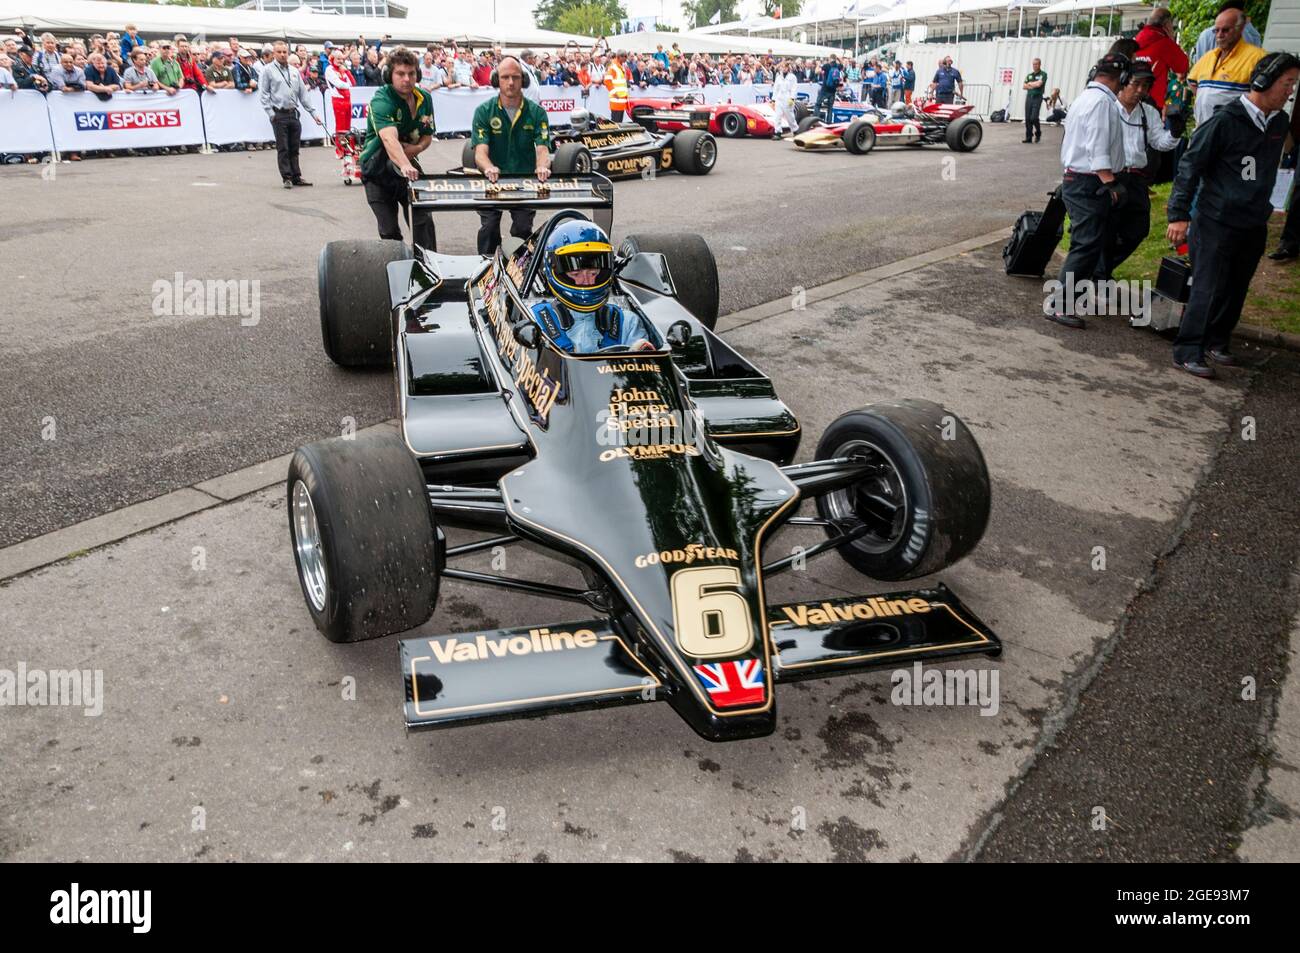 Lotus 79 Formule 1, voiture de course Grand Prix au Goodwood Festival of Speed Motor Racing event 2014, en sortant du paddock. John Player Team Lotus Banque D'Images